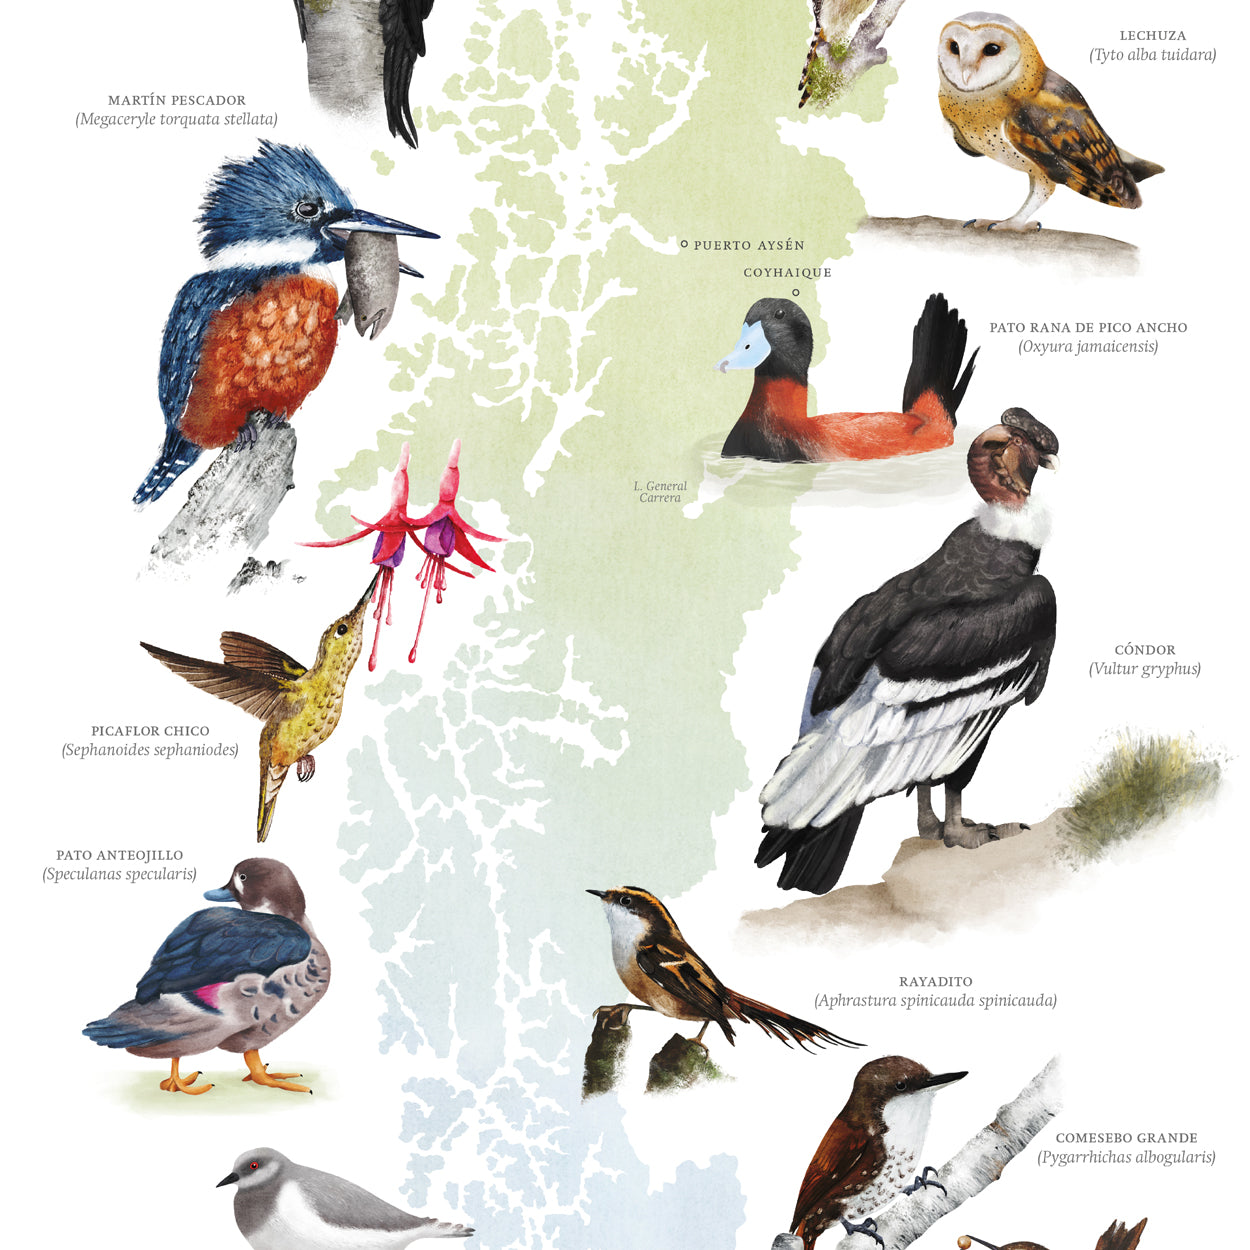 Mapa aves nativas del sur de Chile